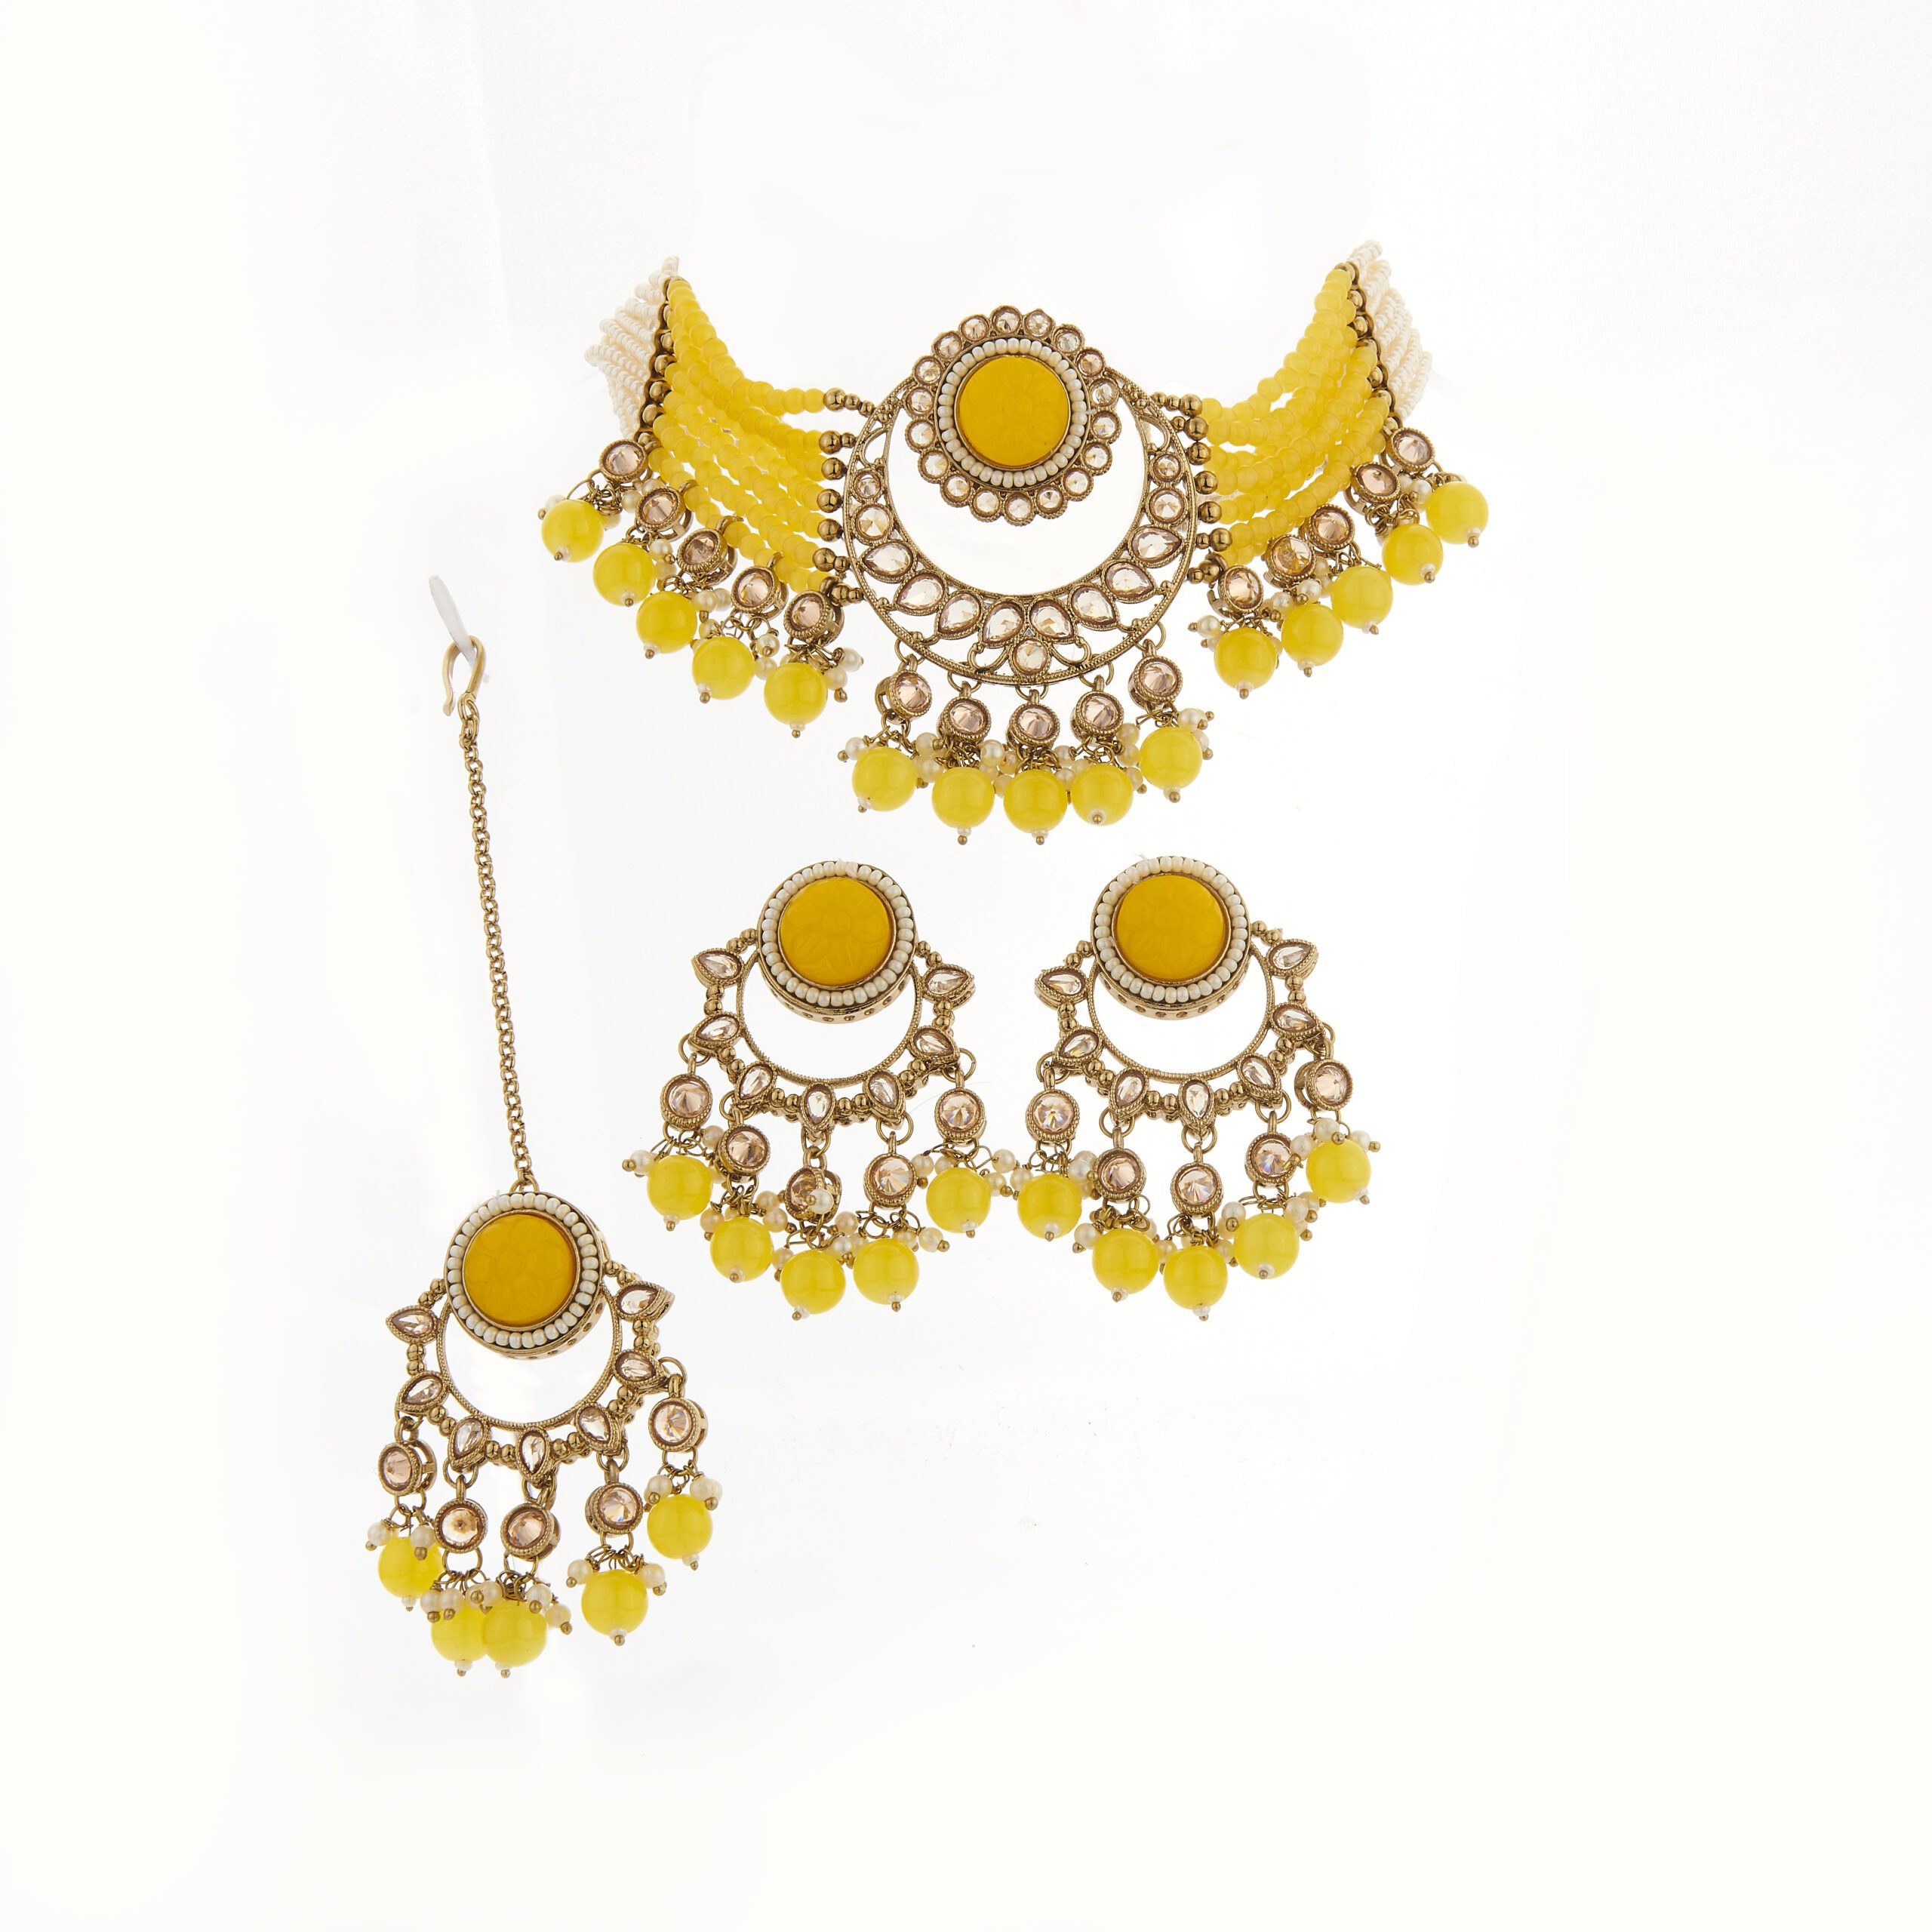 Stone Kundan Choker Necklace Set with Chand Bali Earrings and Maang Tikka